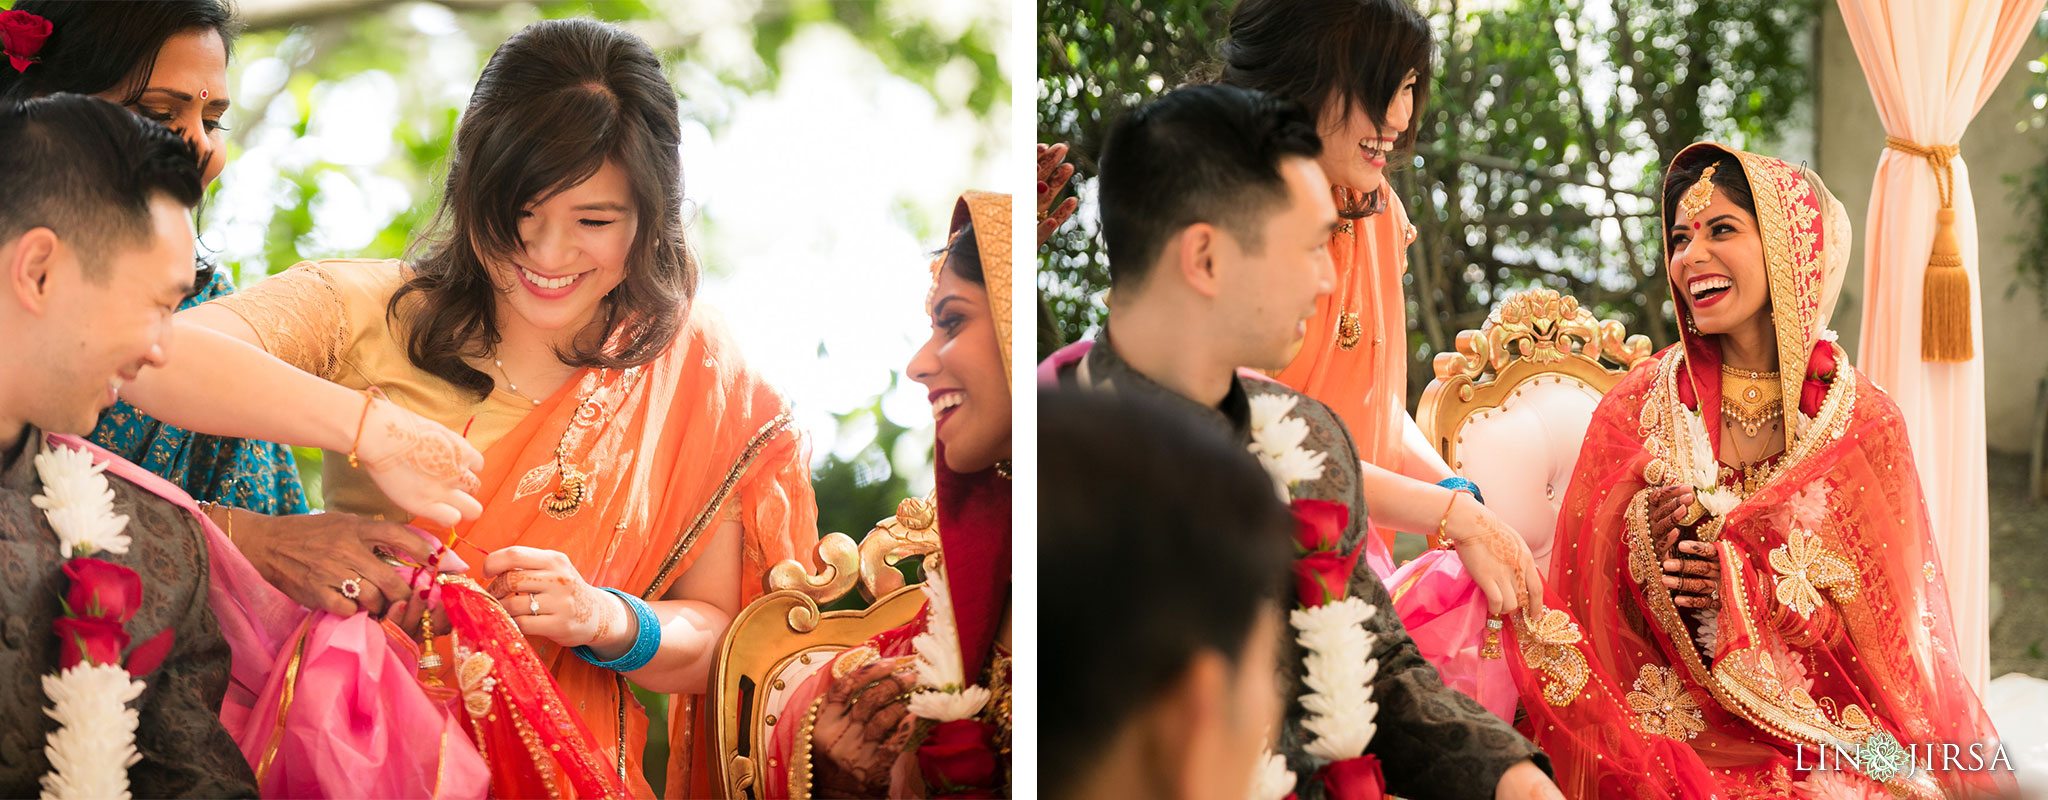 46 sportsmens lodge studio city indian wedding ceremony photography